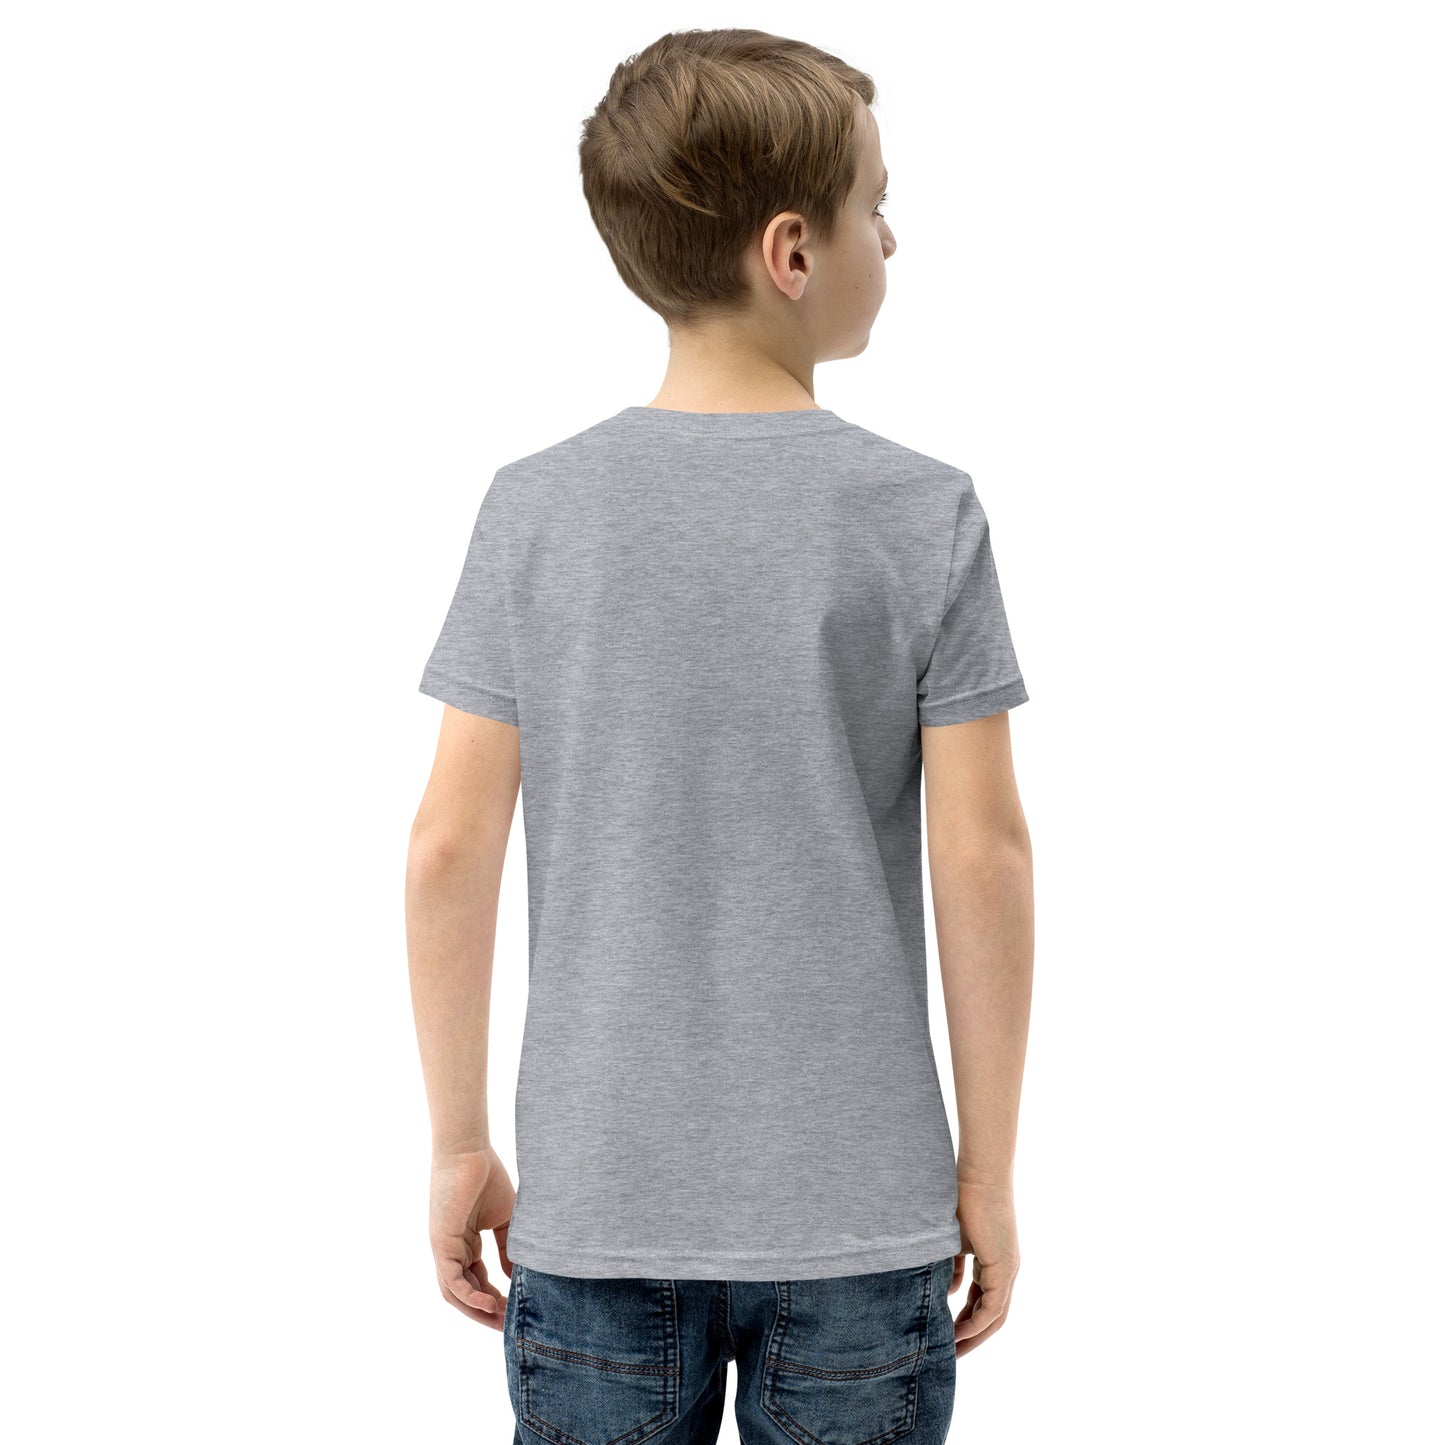 Supercalifragilisticexpialidocious Kid's T-Shirt